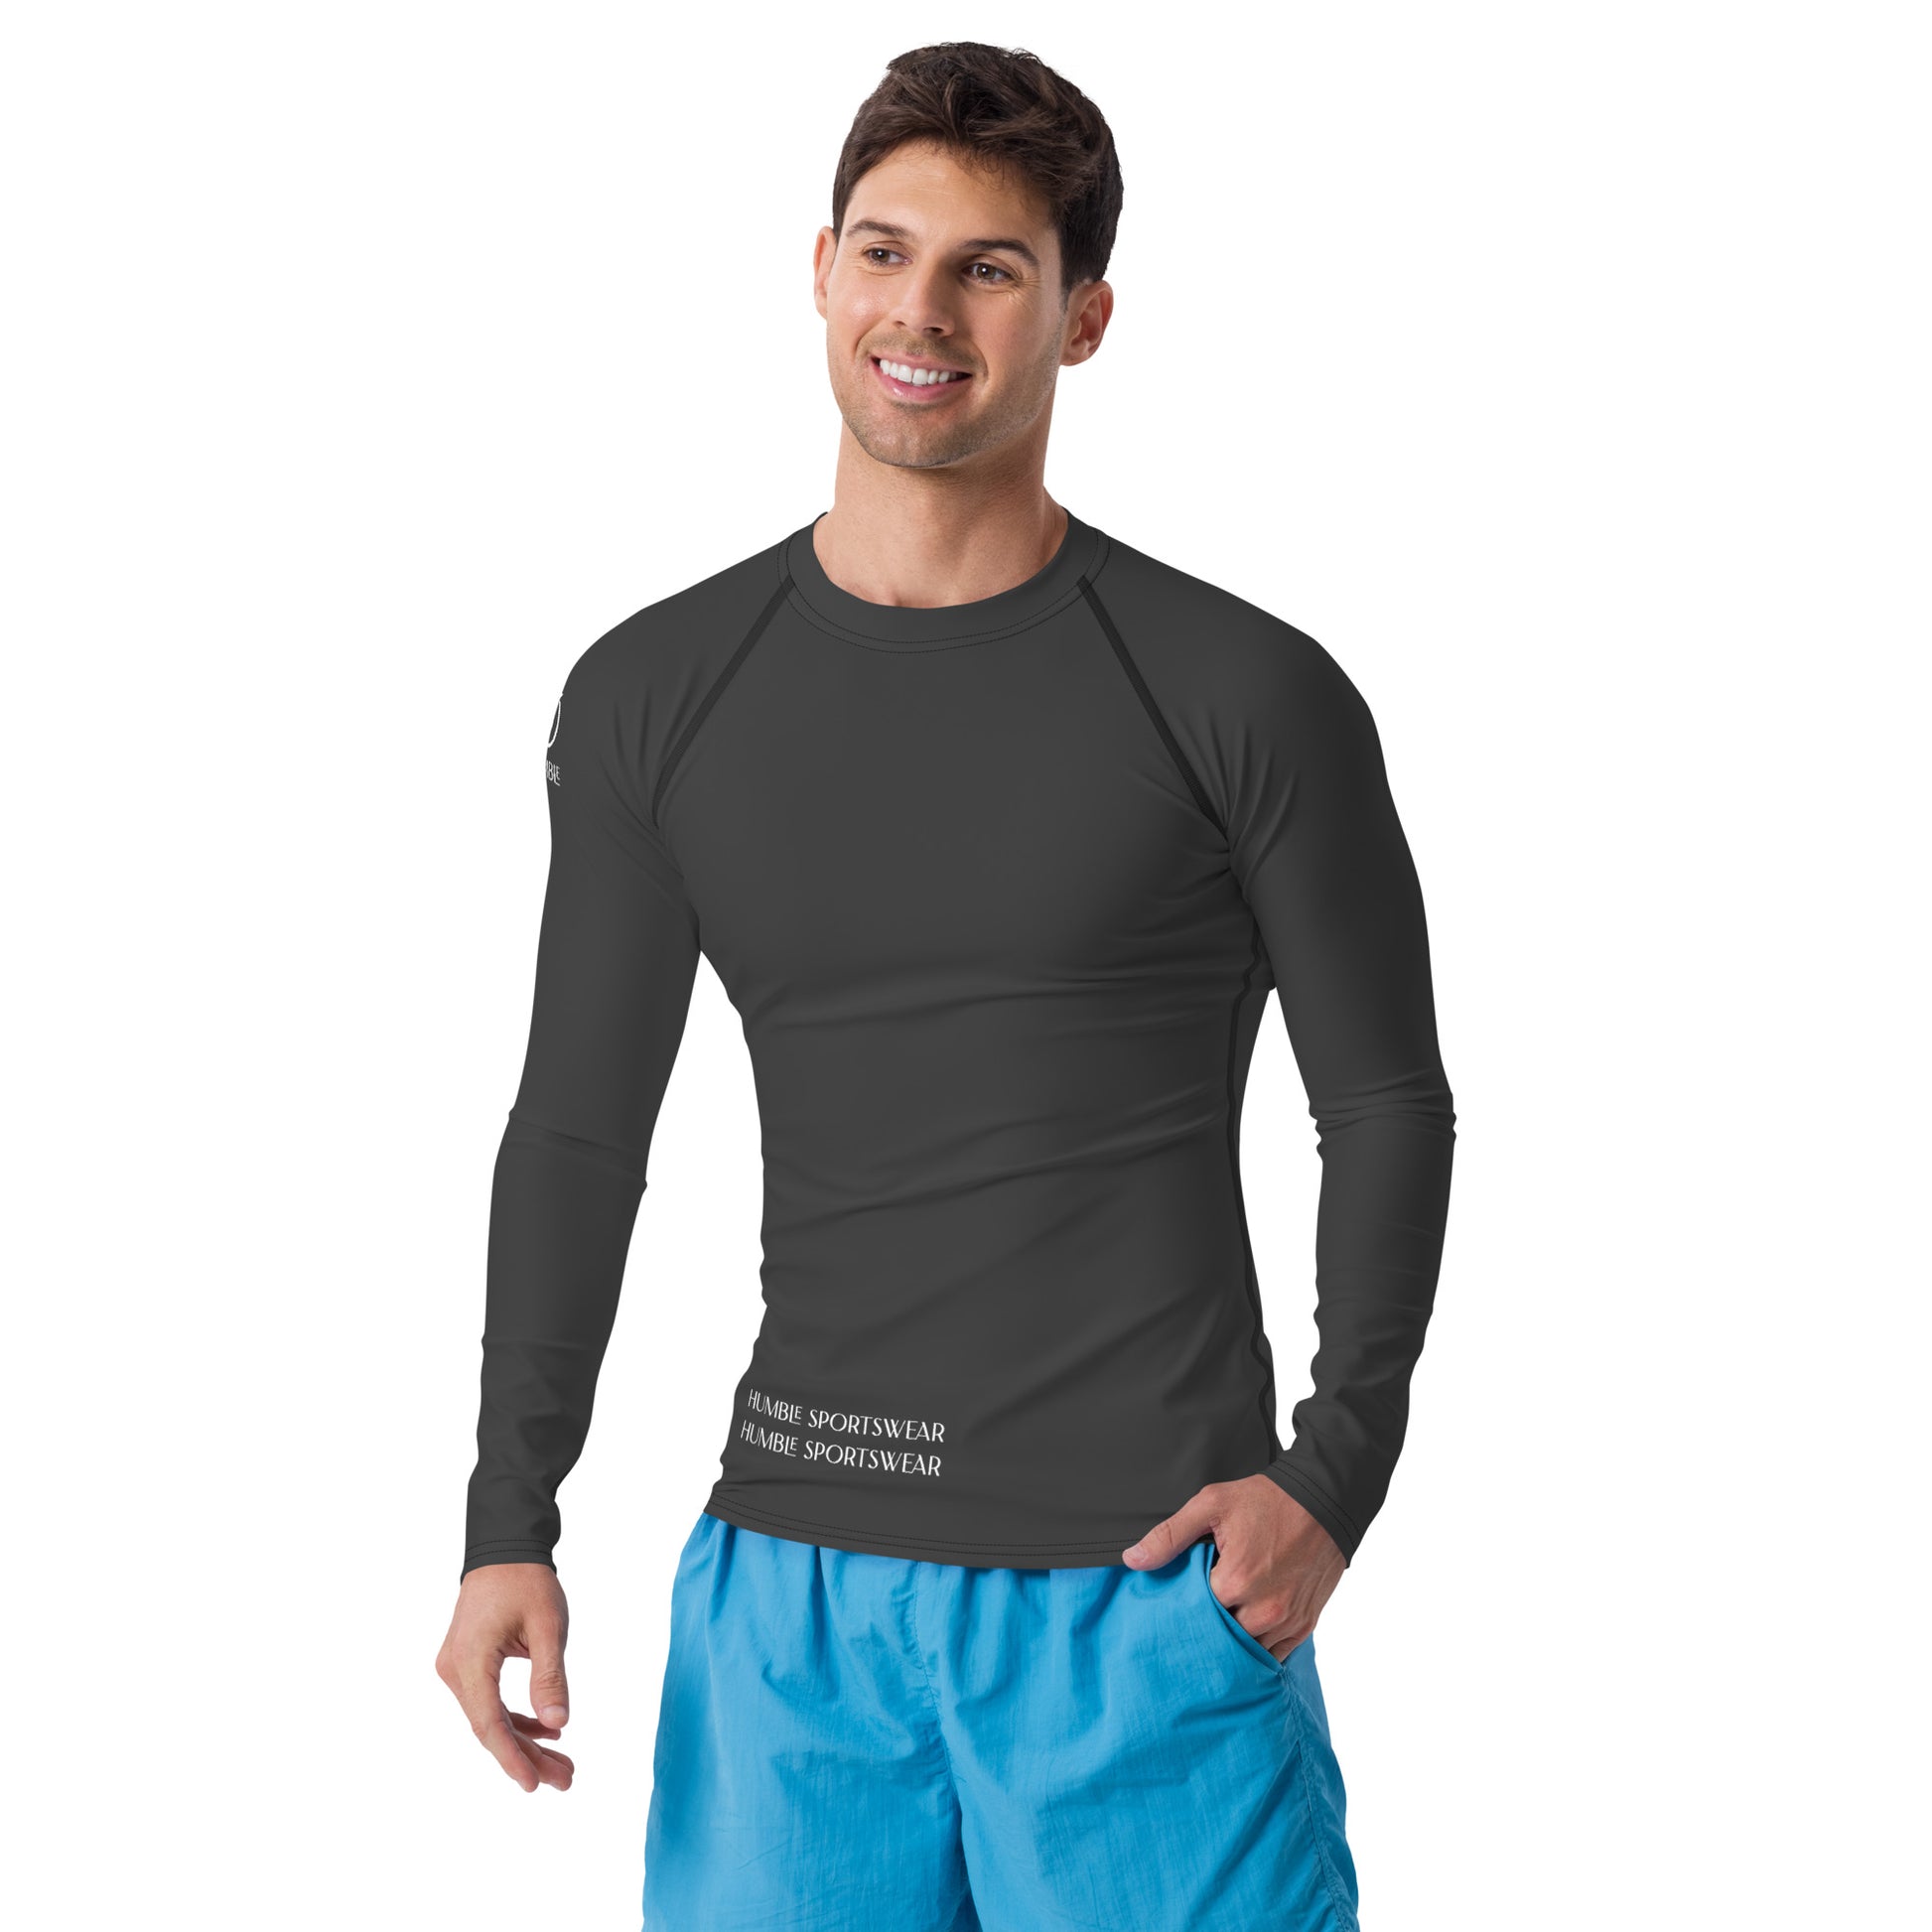 Humble Sportswear, men's color match tops. men's athletic wear rash guards for swim, compression top